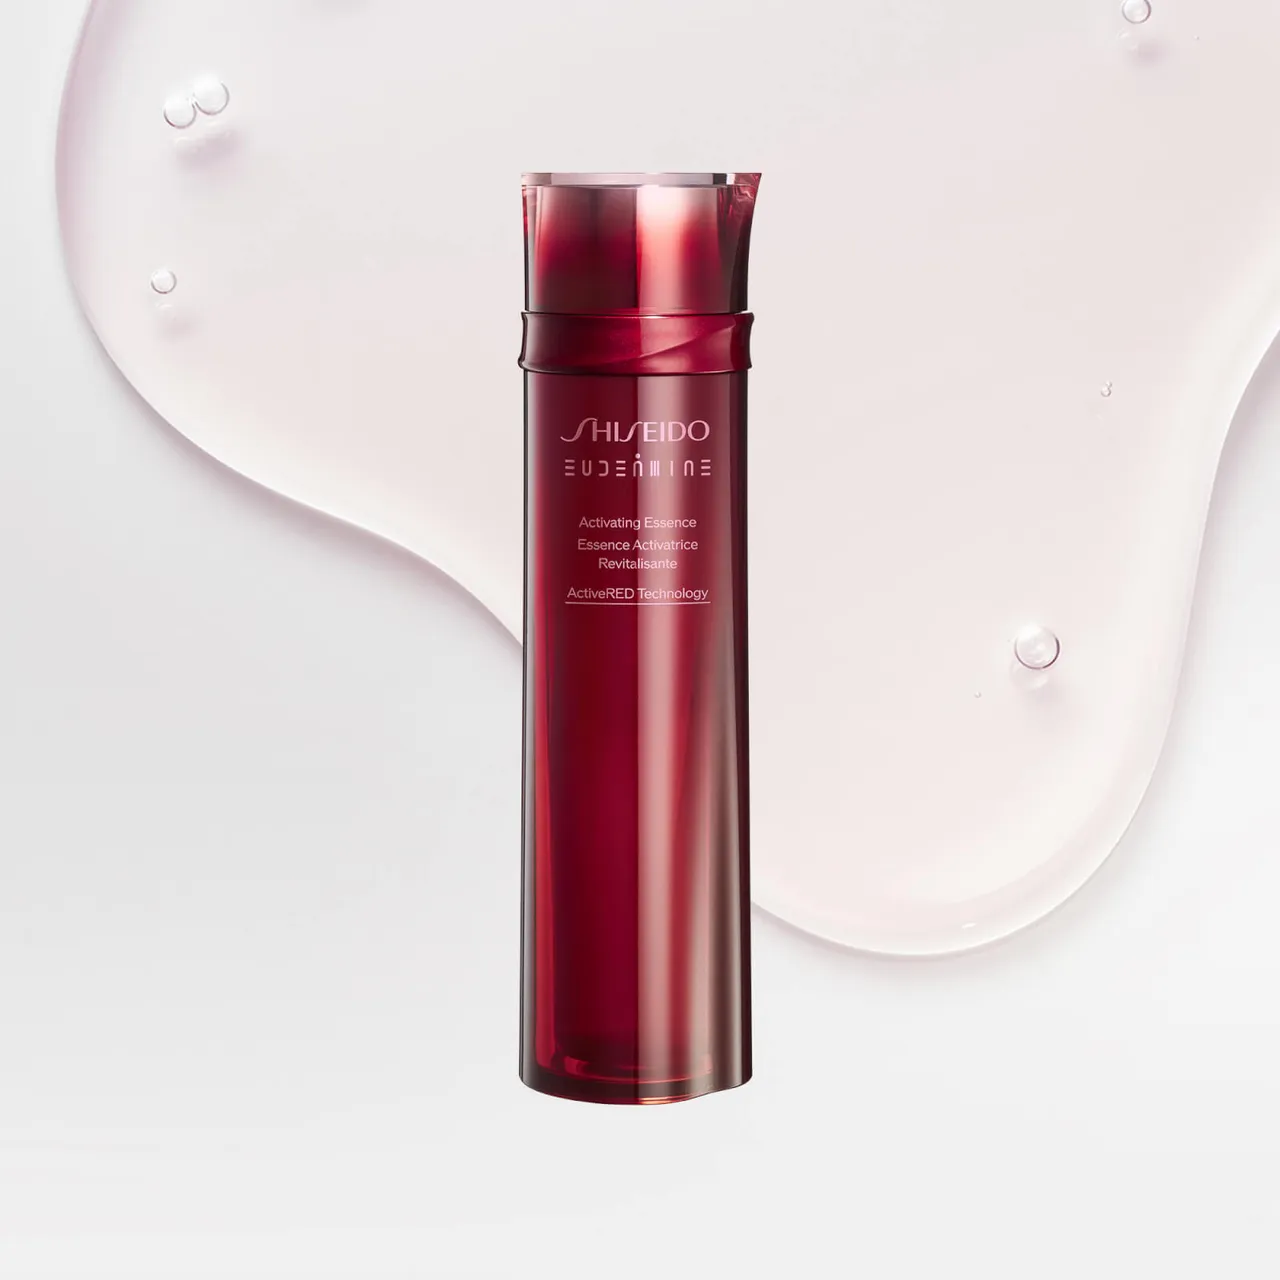 Shiseido Eudermine Revitalising Essence 145ml